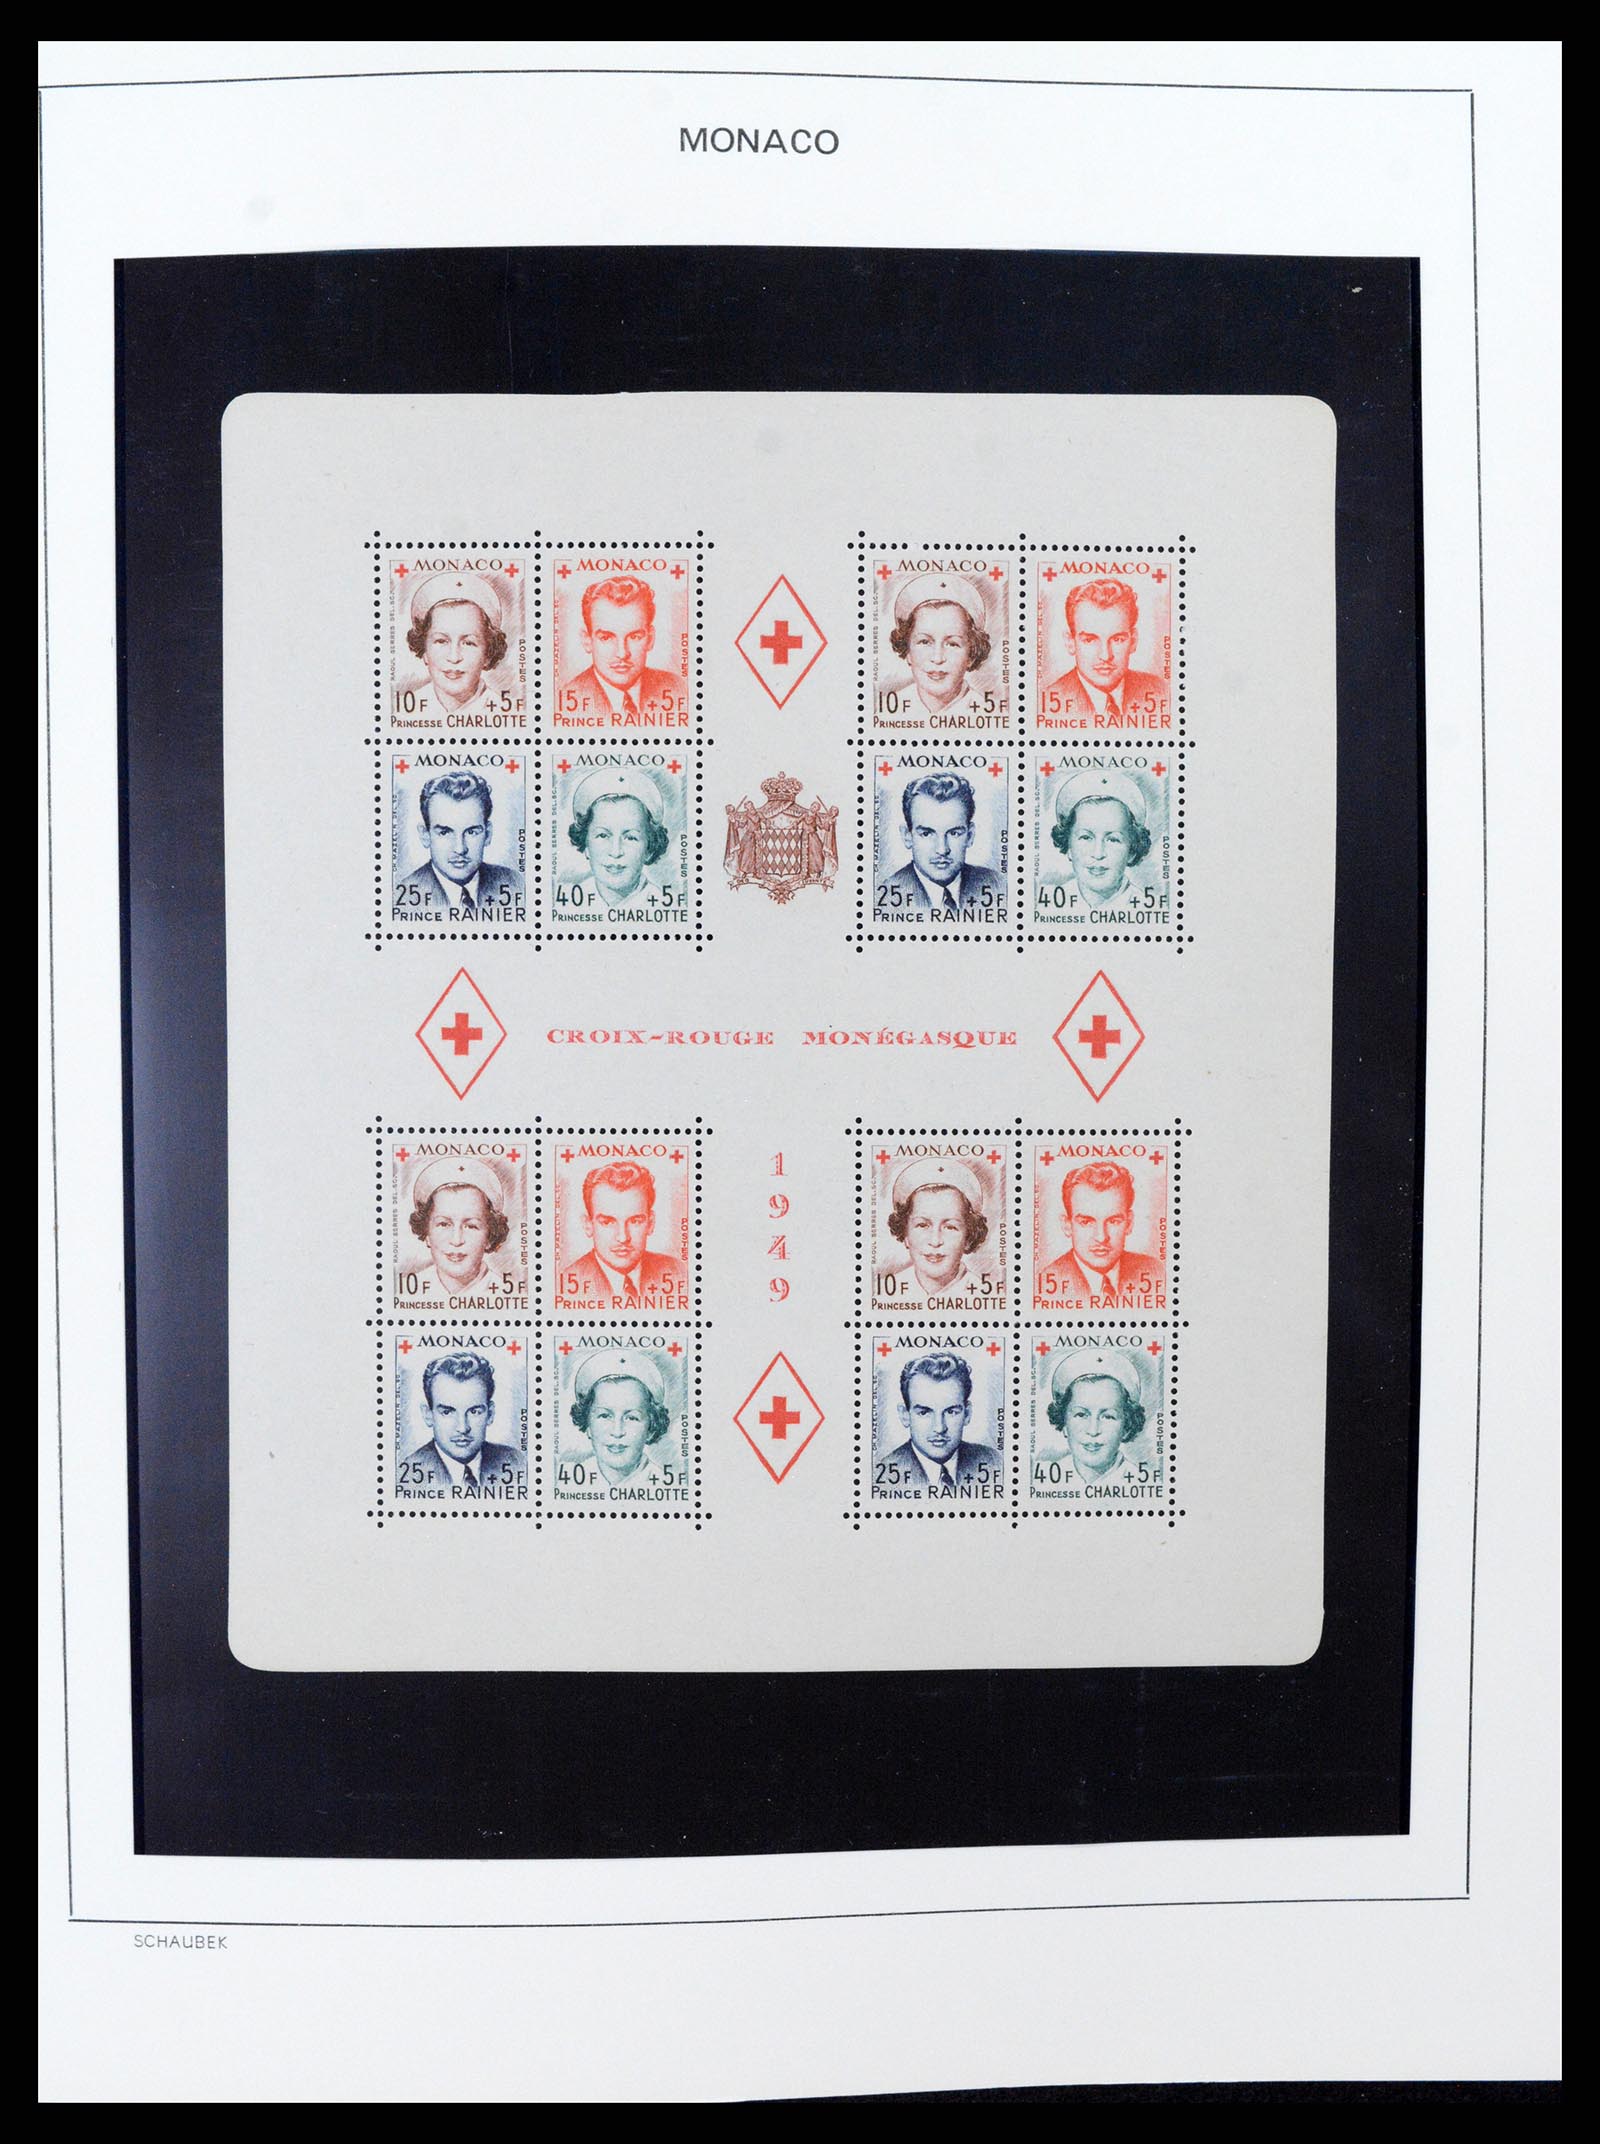 37570 029 - Stamp collection 37570 Monaco 1885-2013.